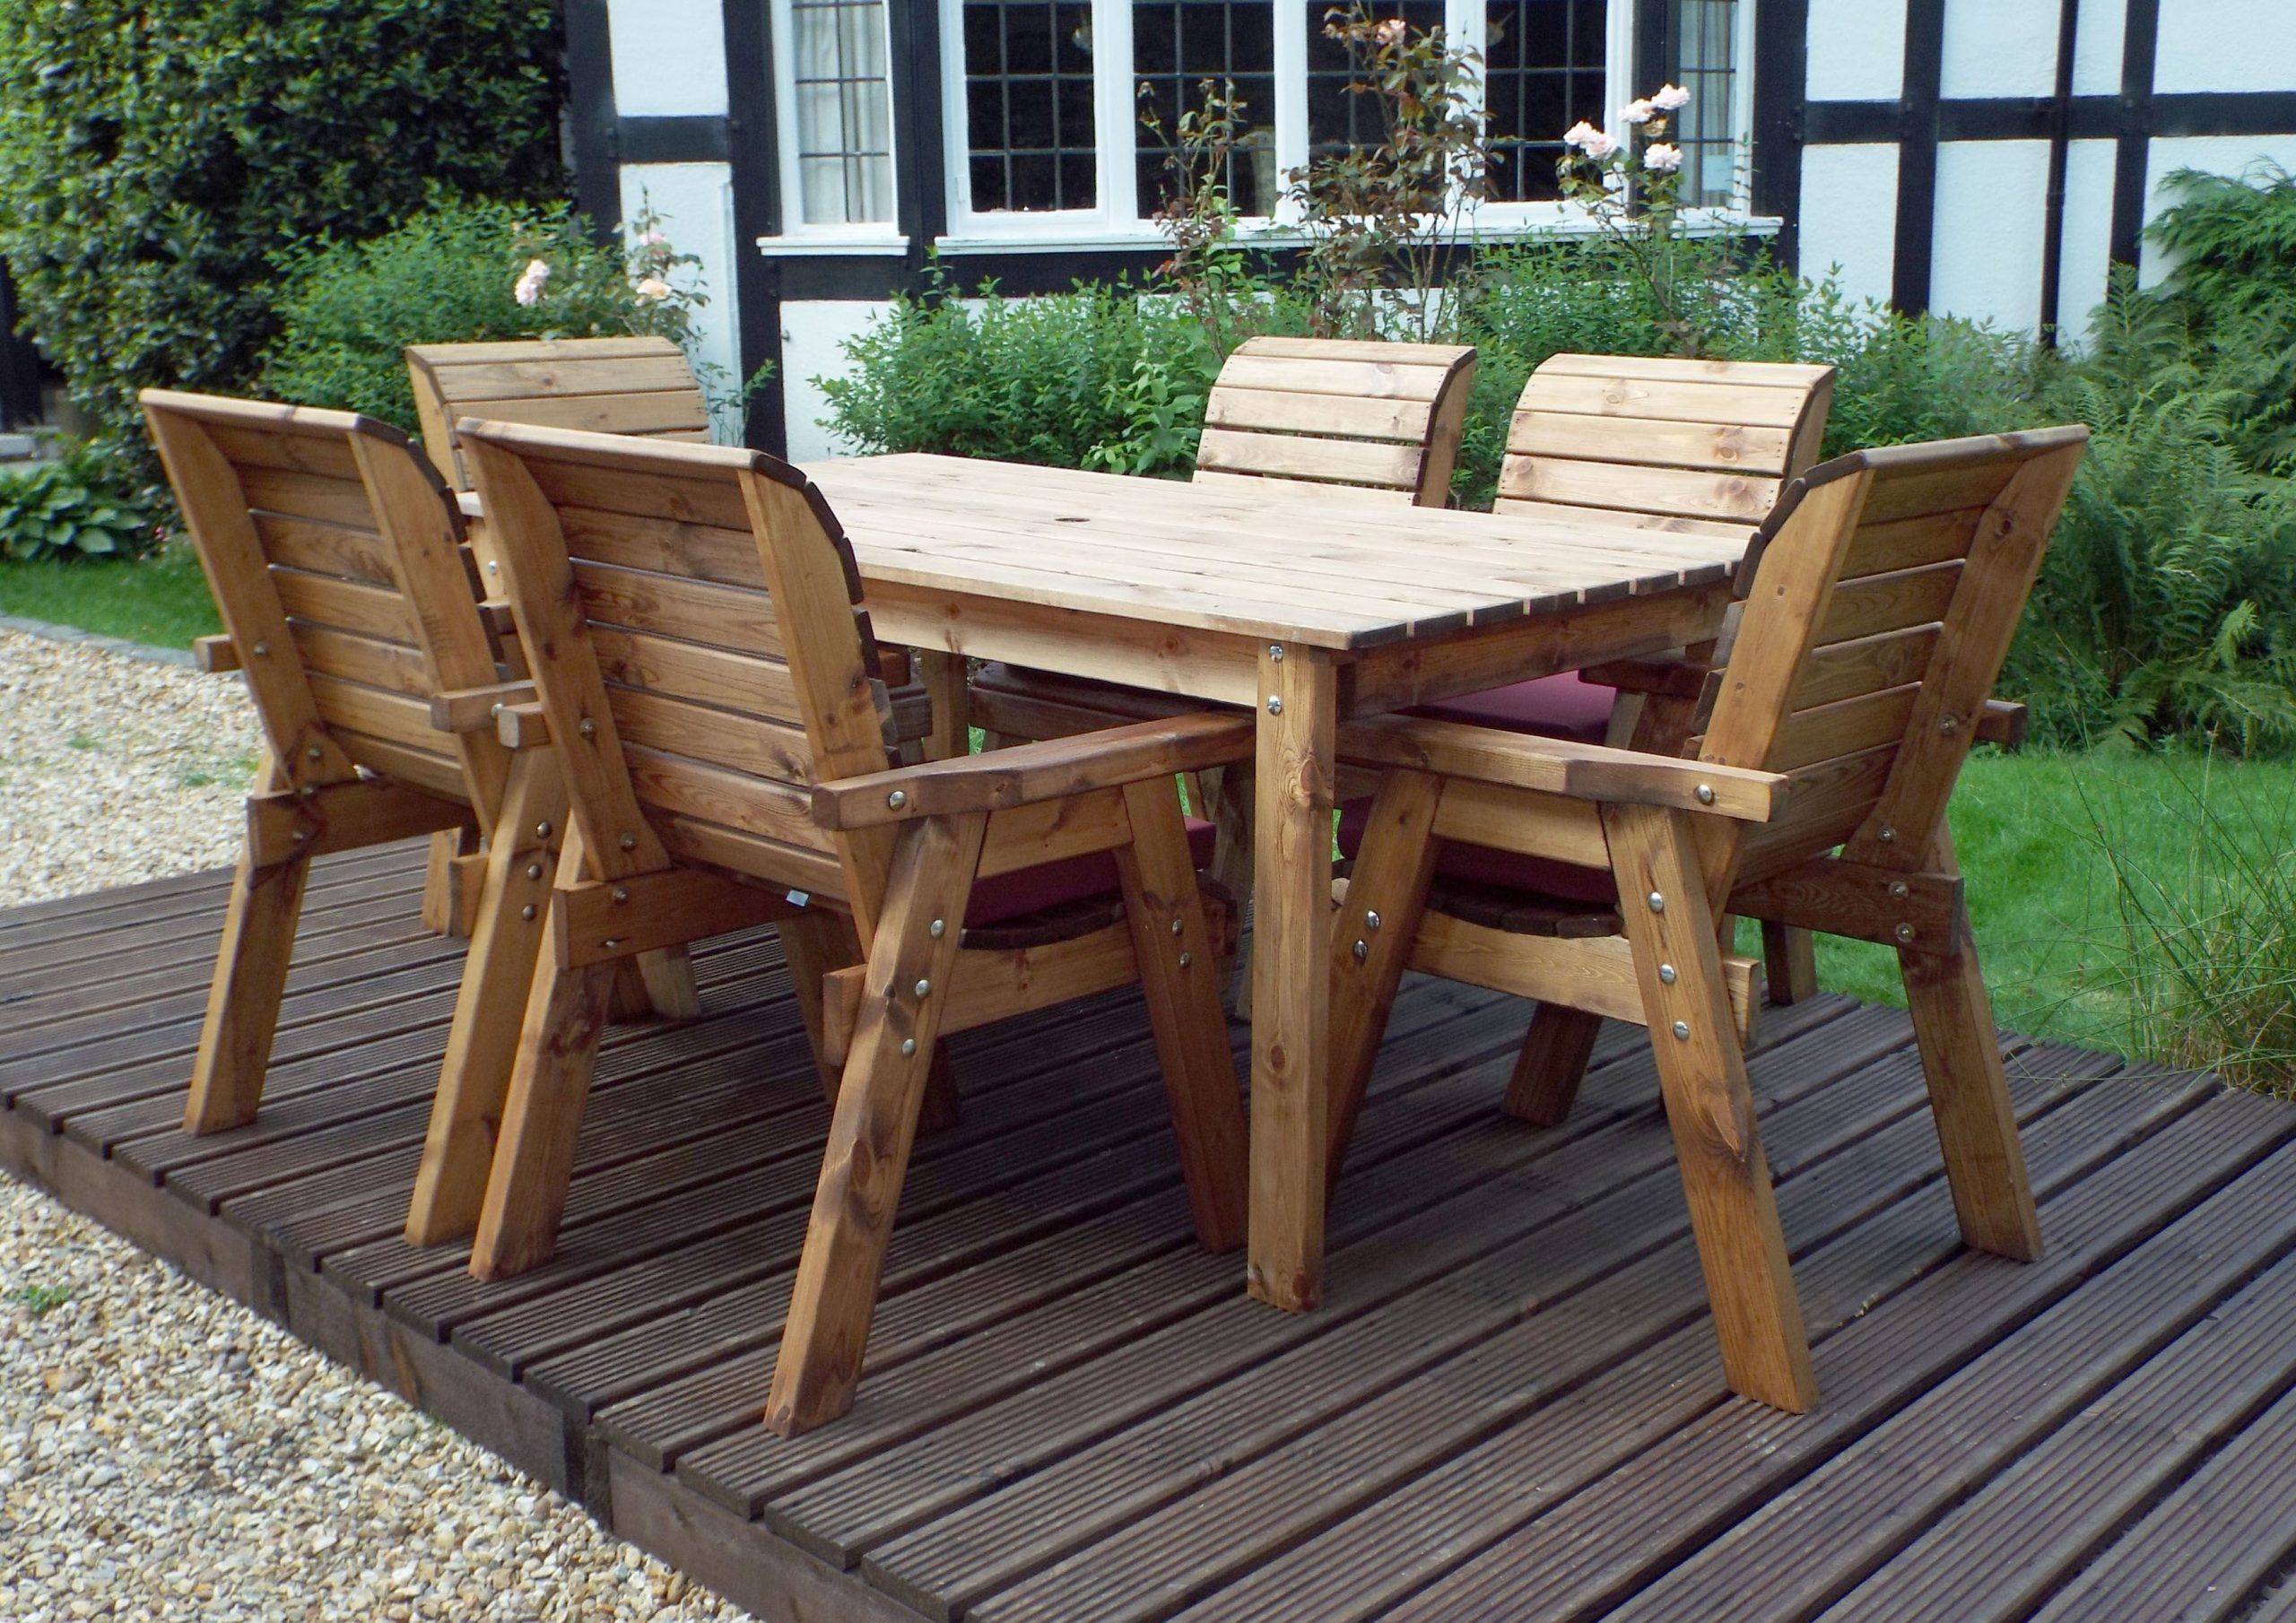  6 seater wooden garden furniture sets